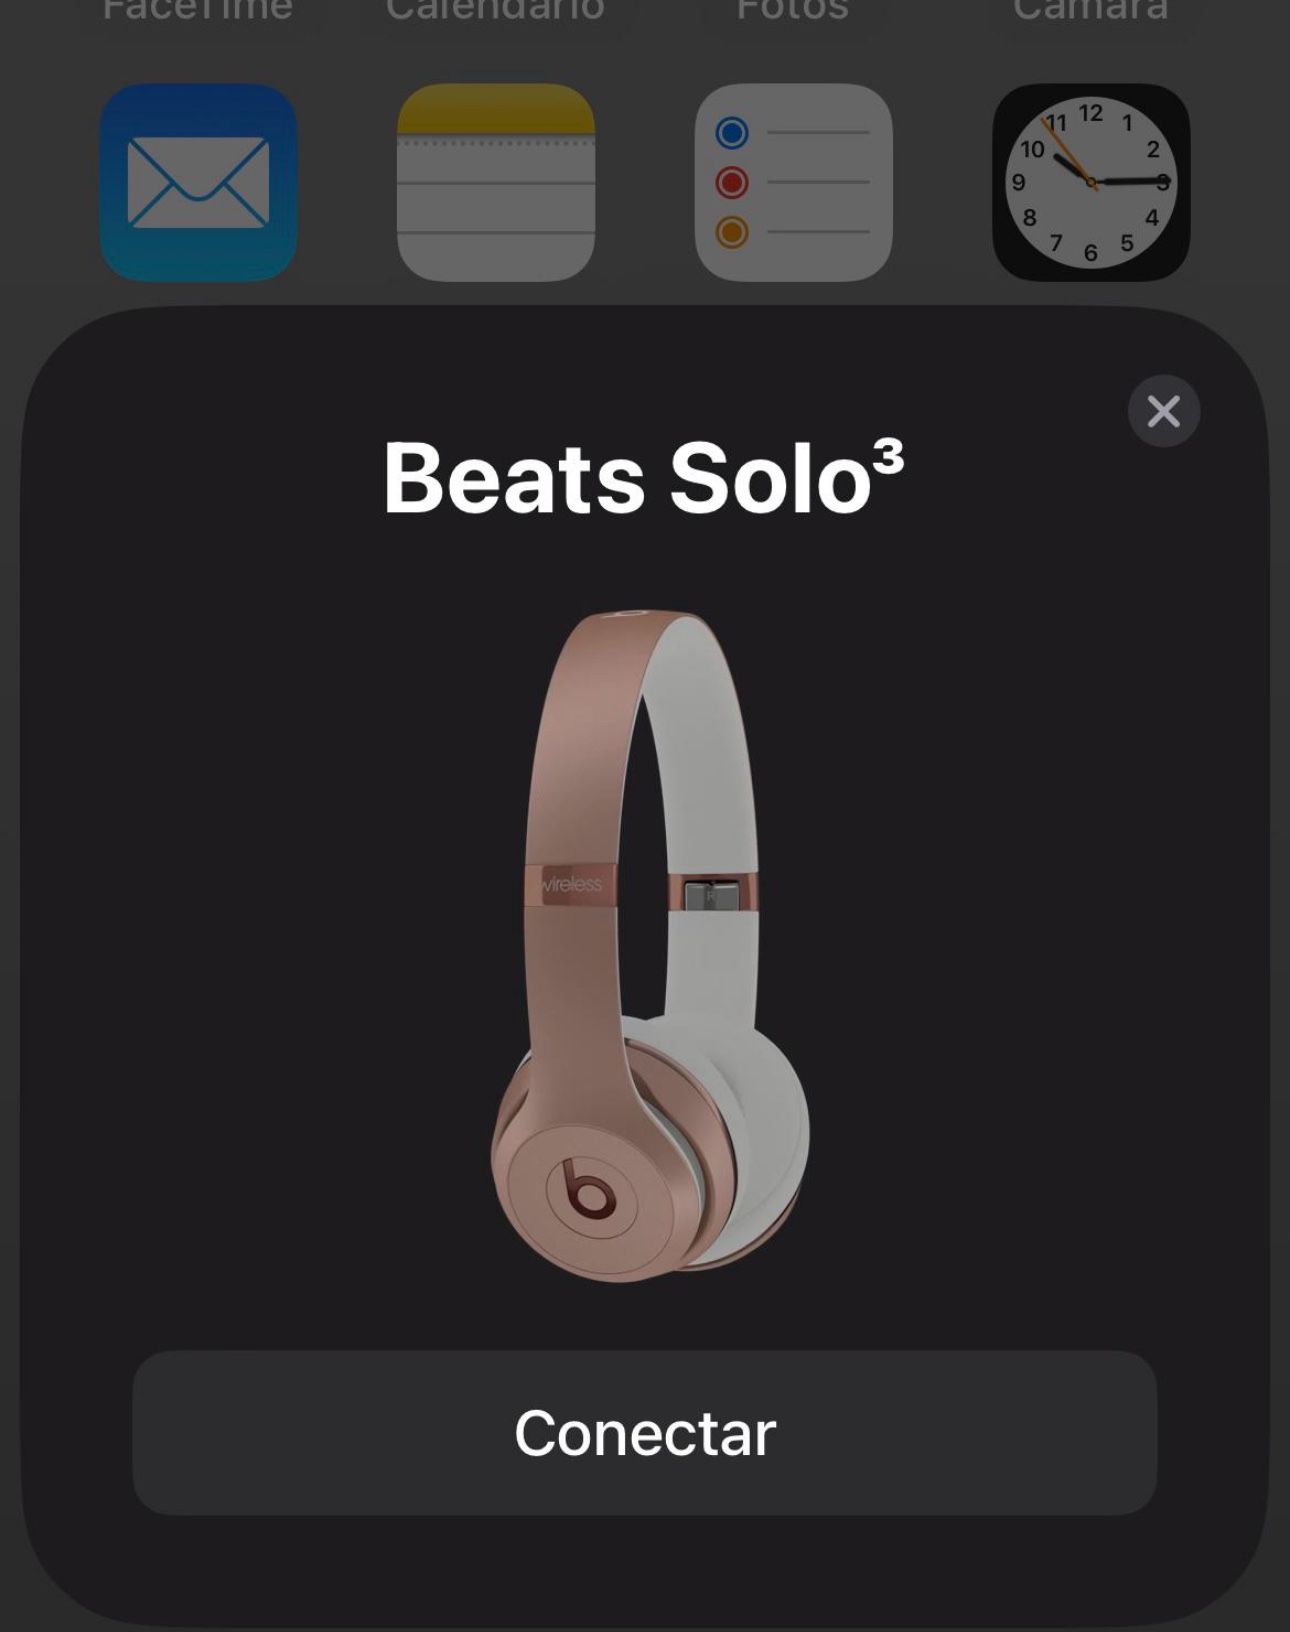  Beats Solo 3 